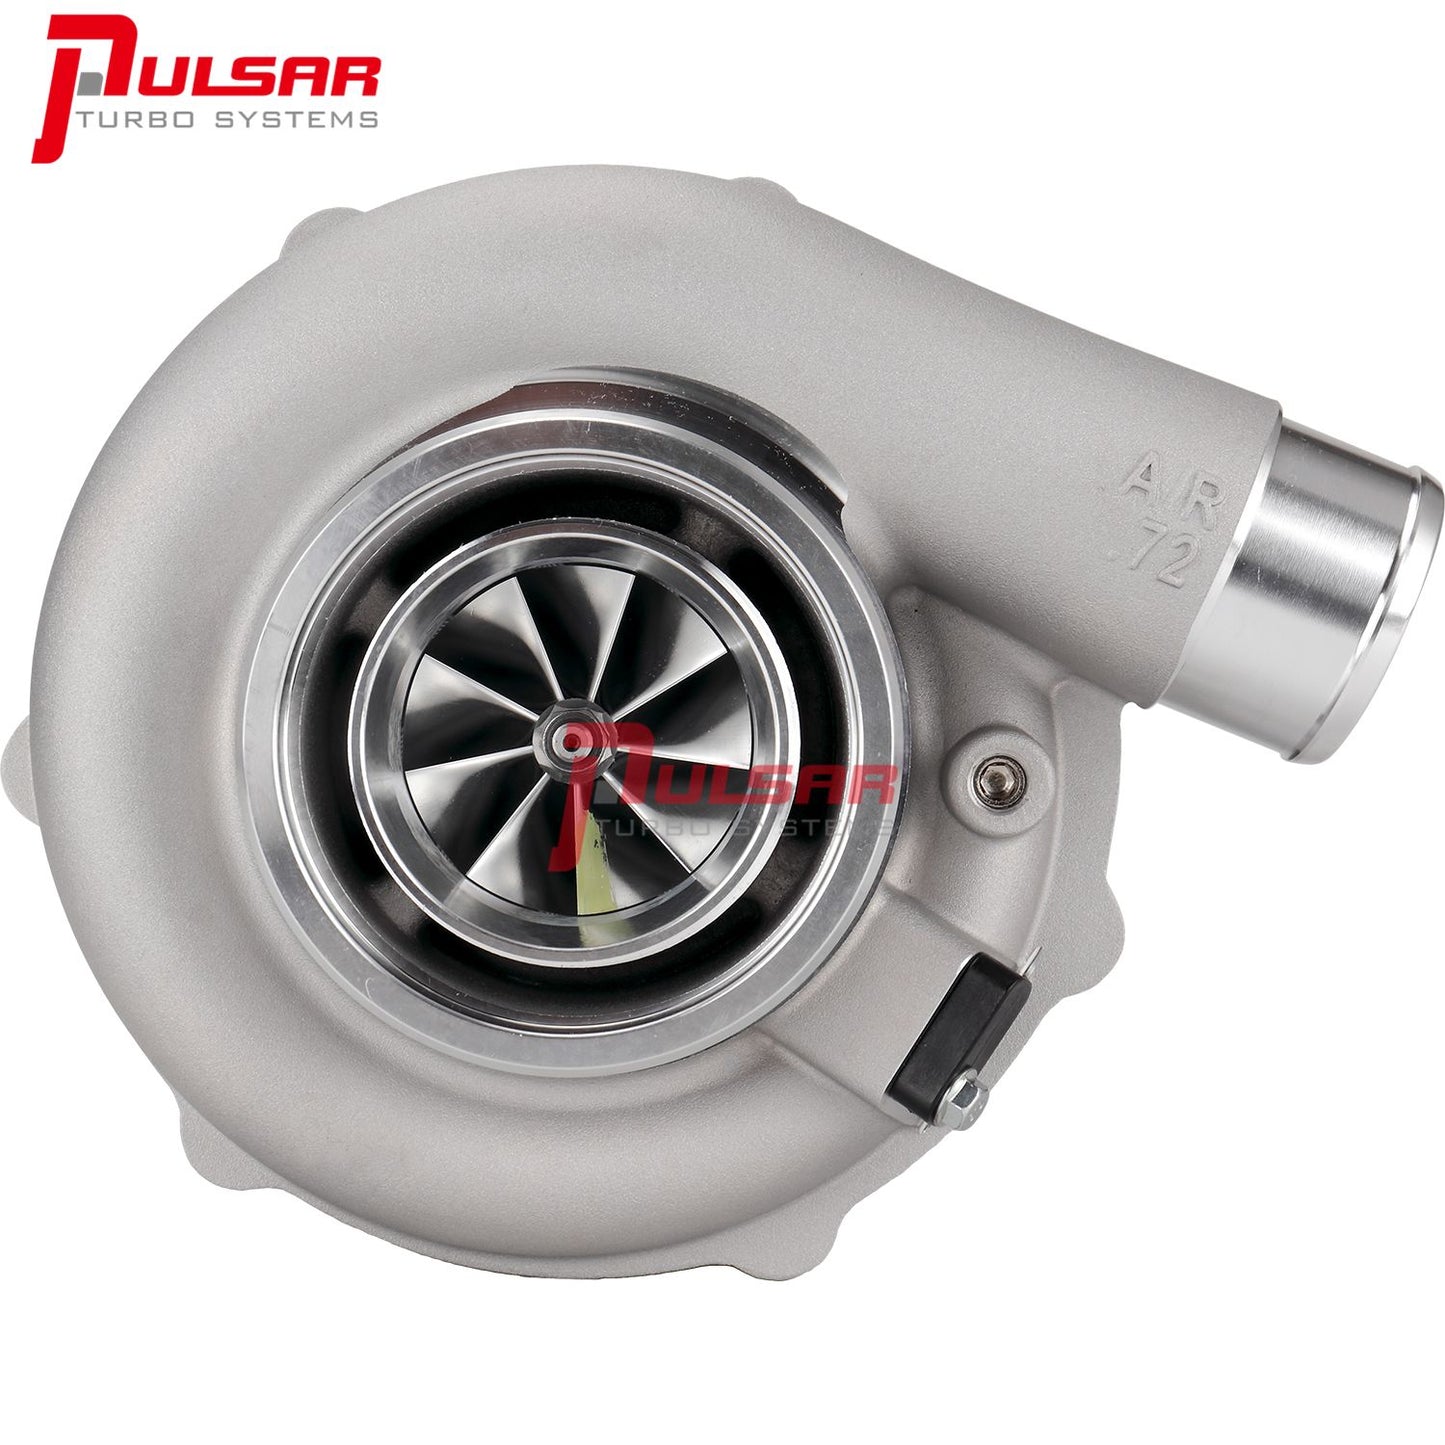 PULSAR G30-900 Dual Ball Bearing Turbo